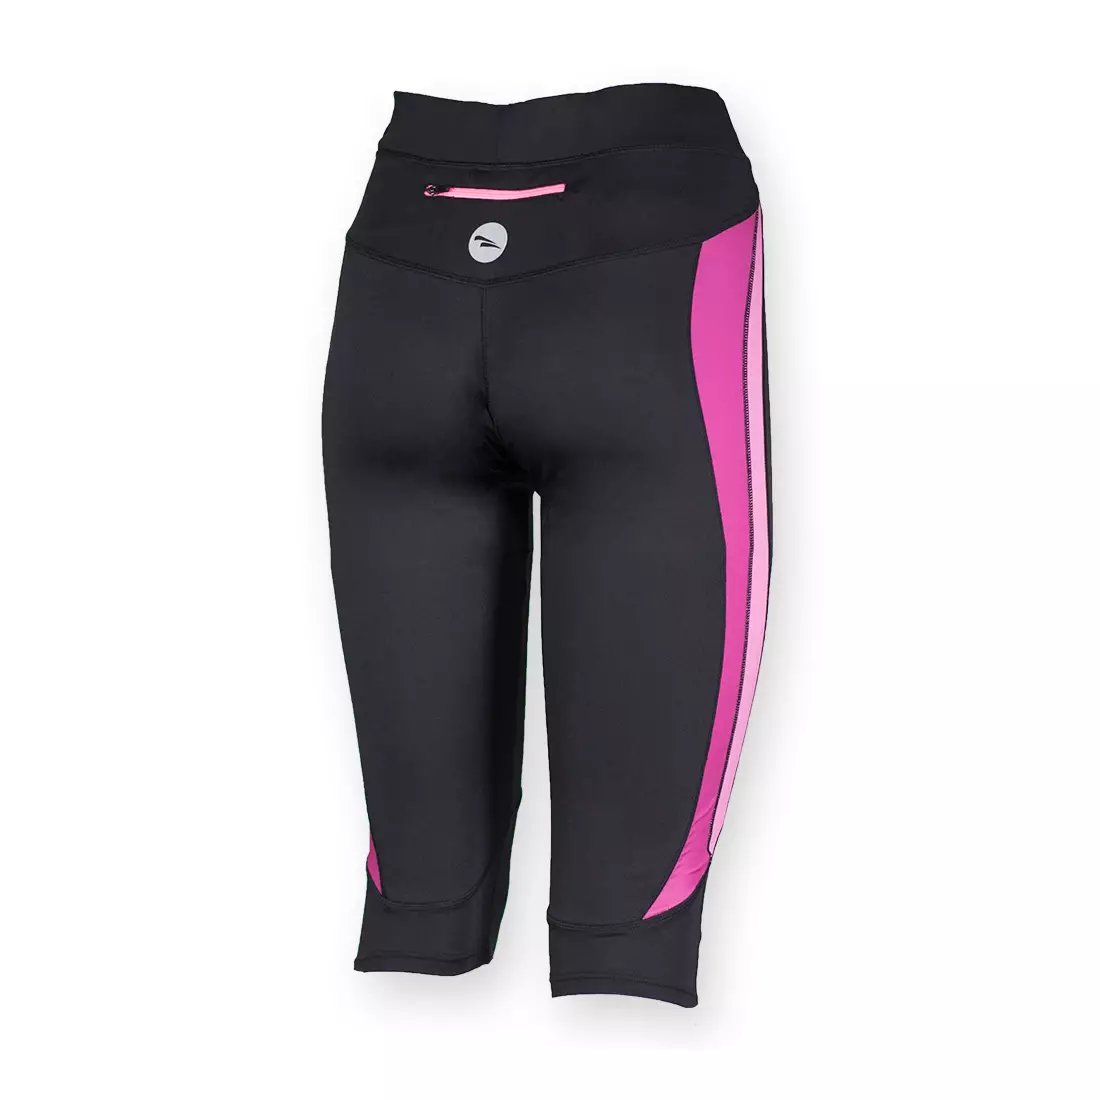 ROGELLI TONIA women's running shorts, 3/4 leg, black and pink